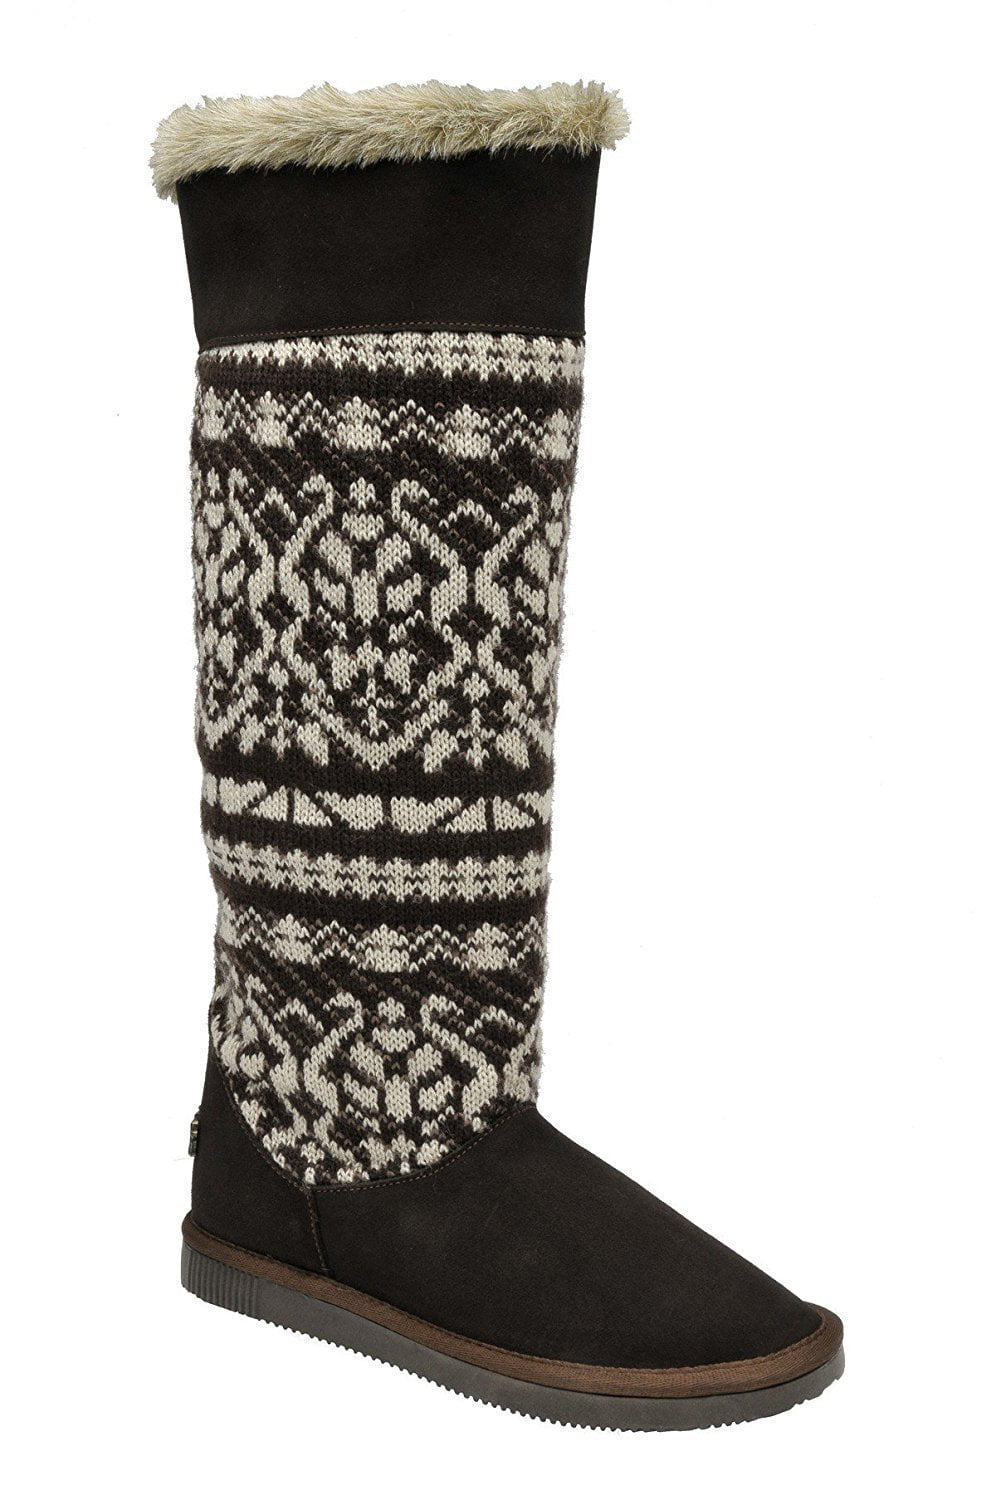 CORRAL Women's Knit Winter Boots P5063 (9.5 B(M) US) - Walmart.com